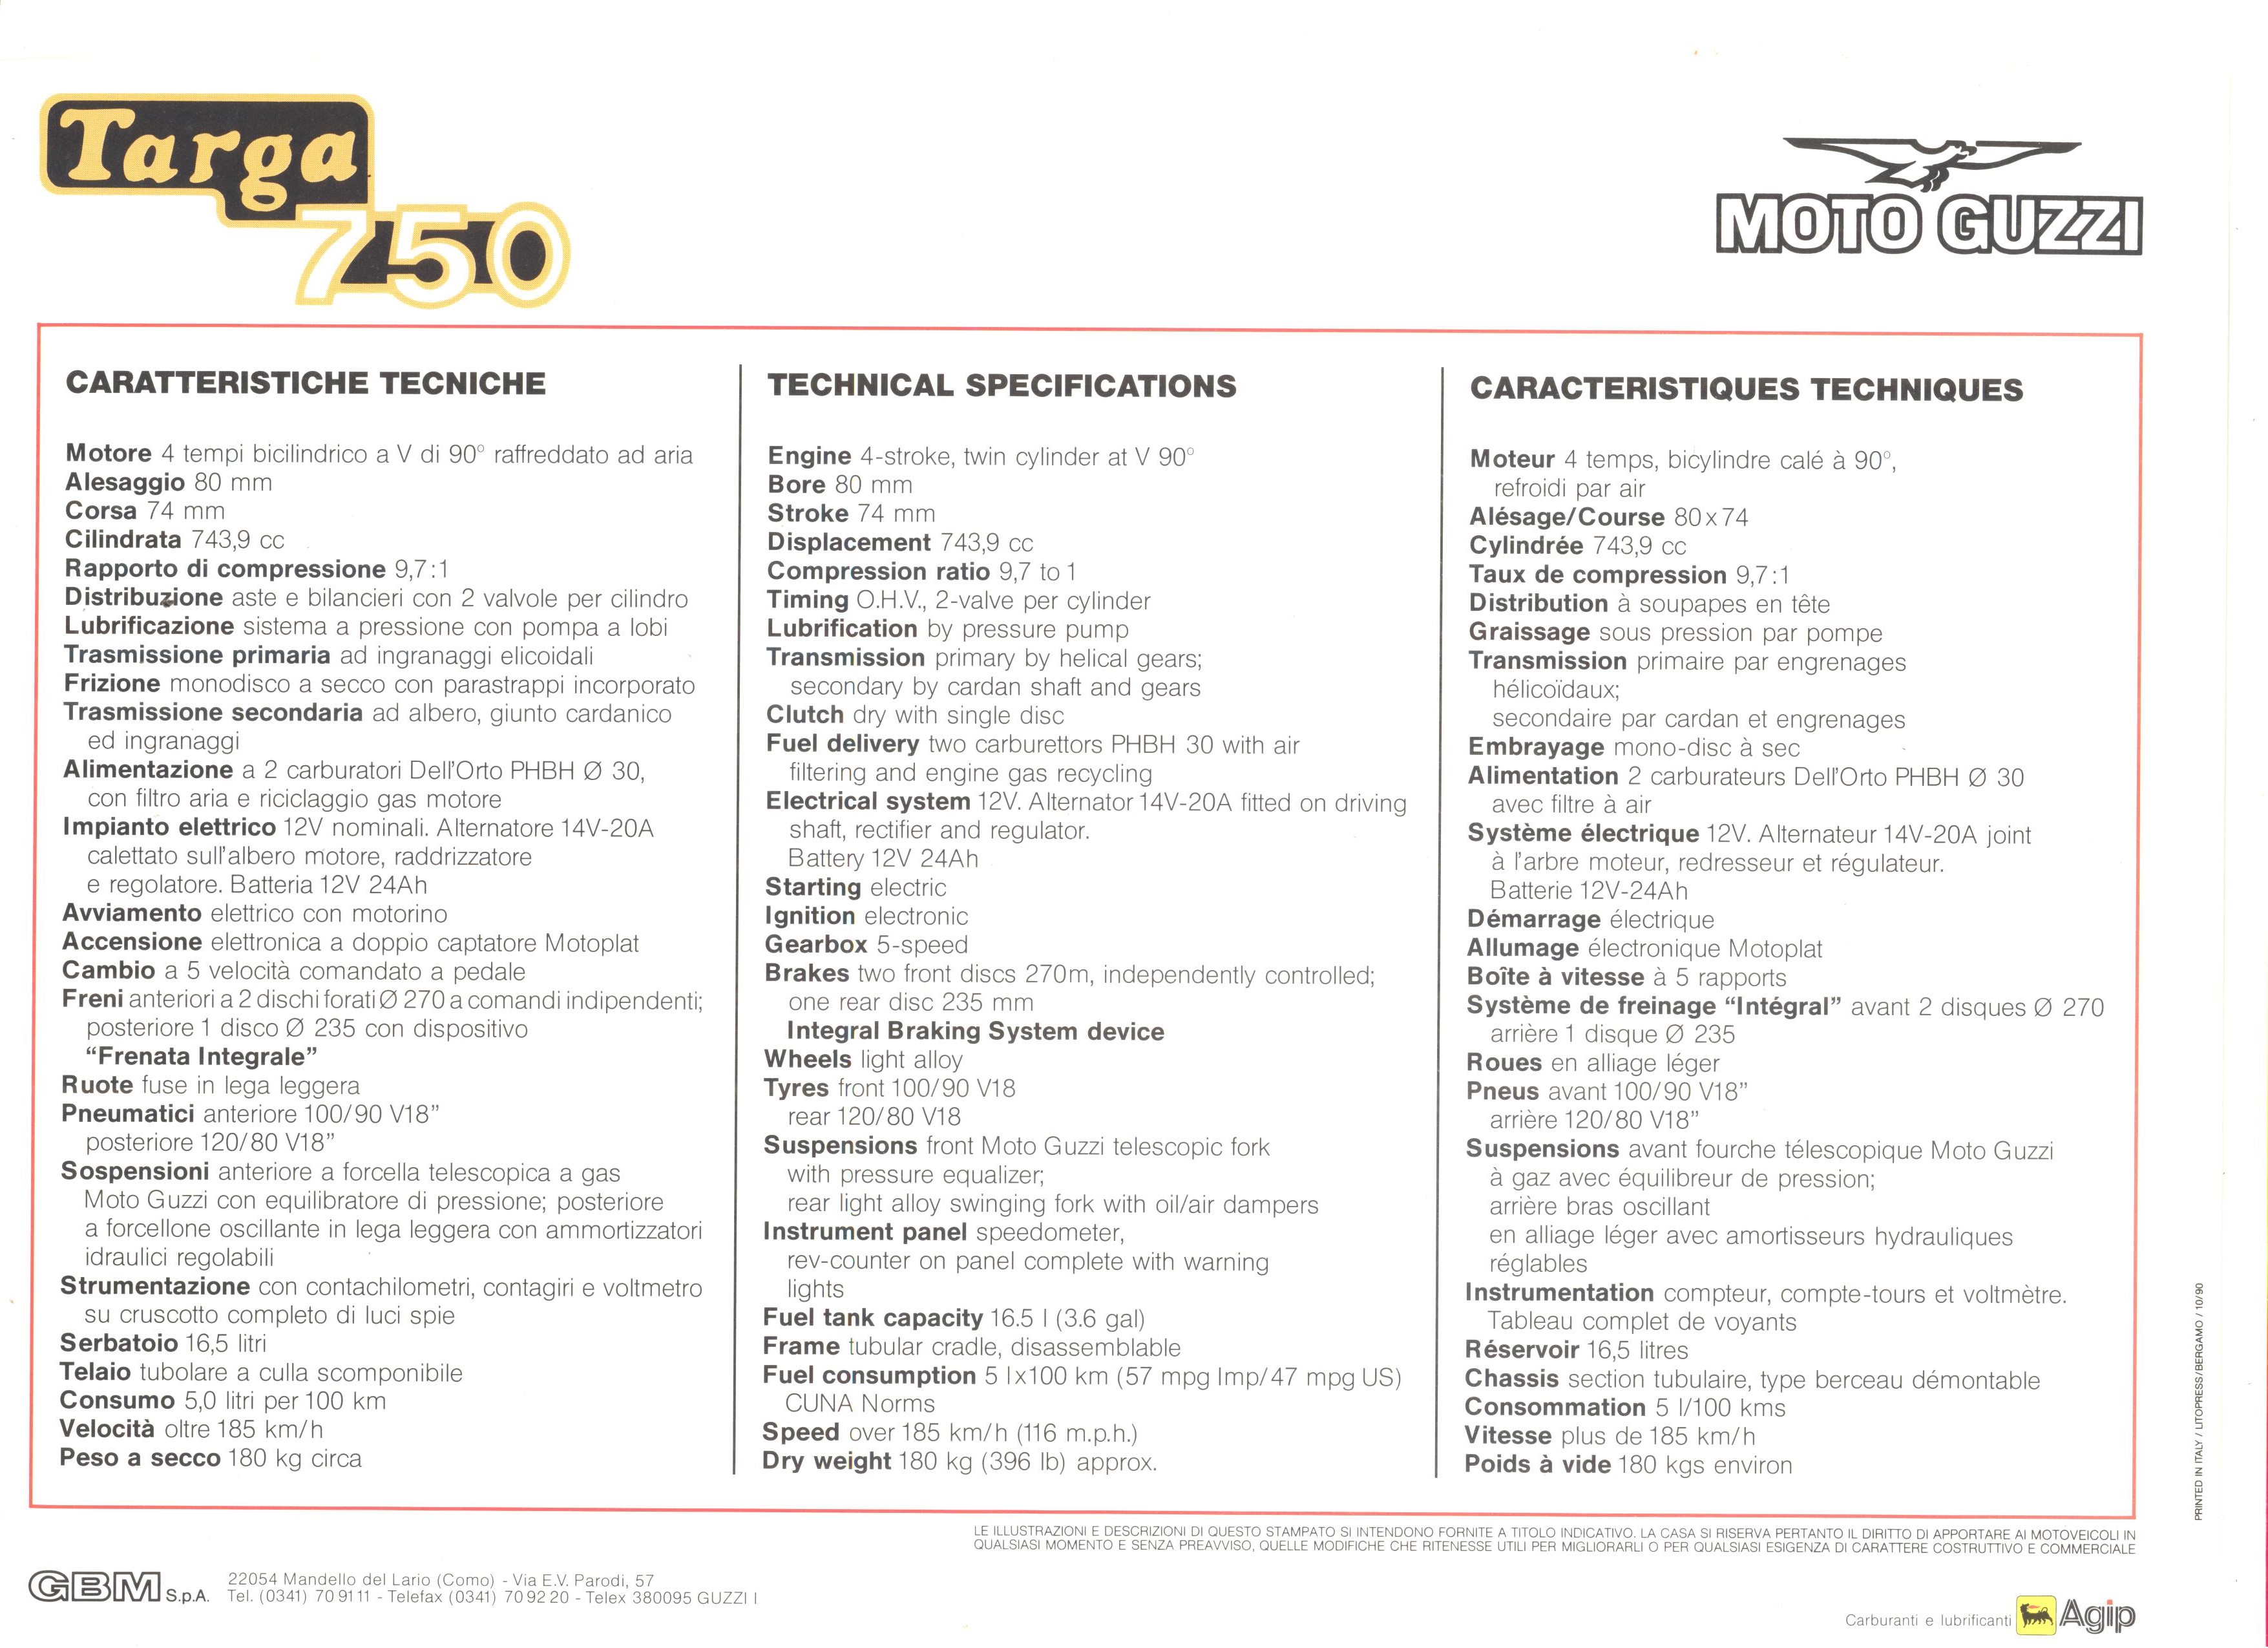 Moto Guzzi factory brochure: Targa 750